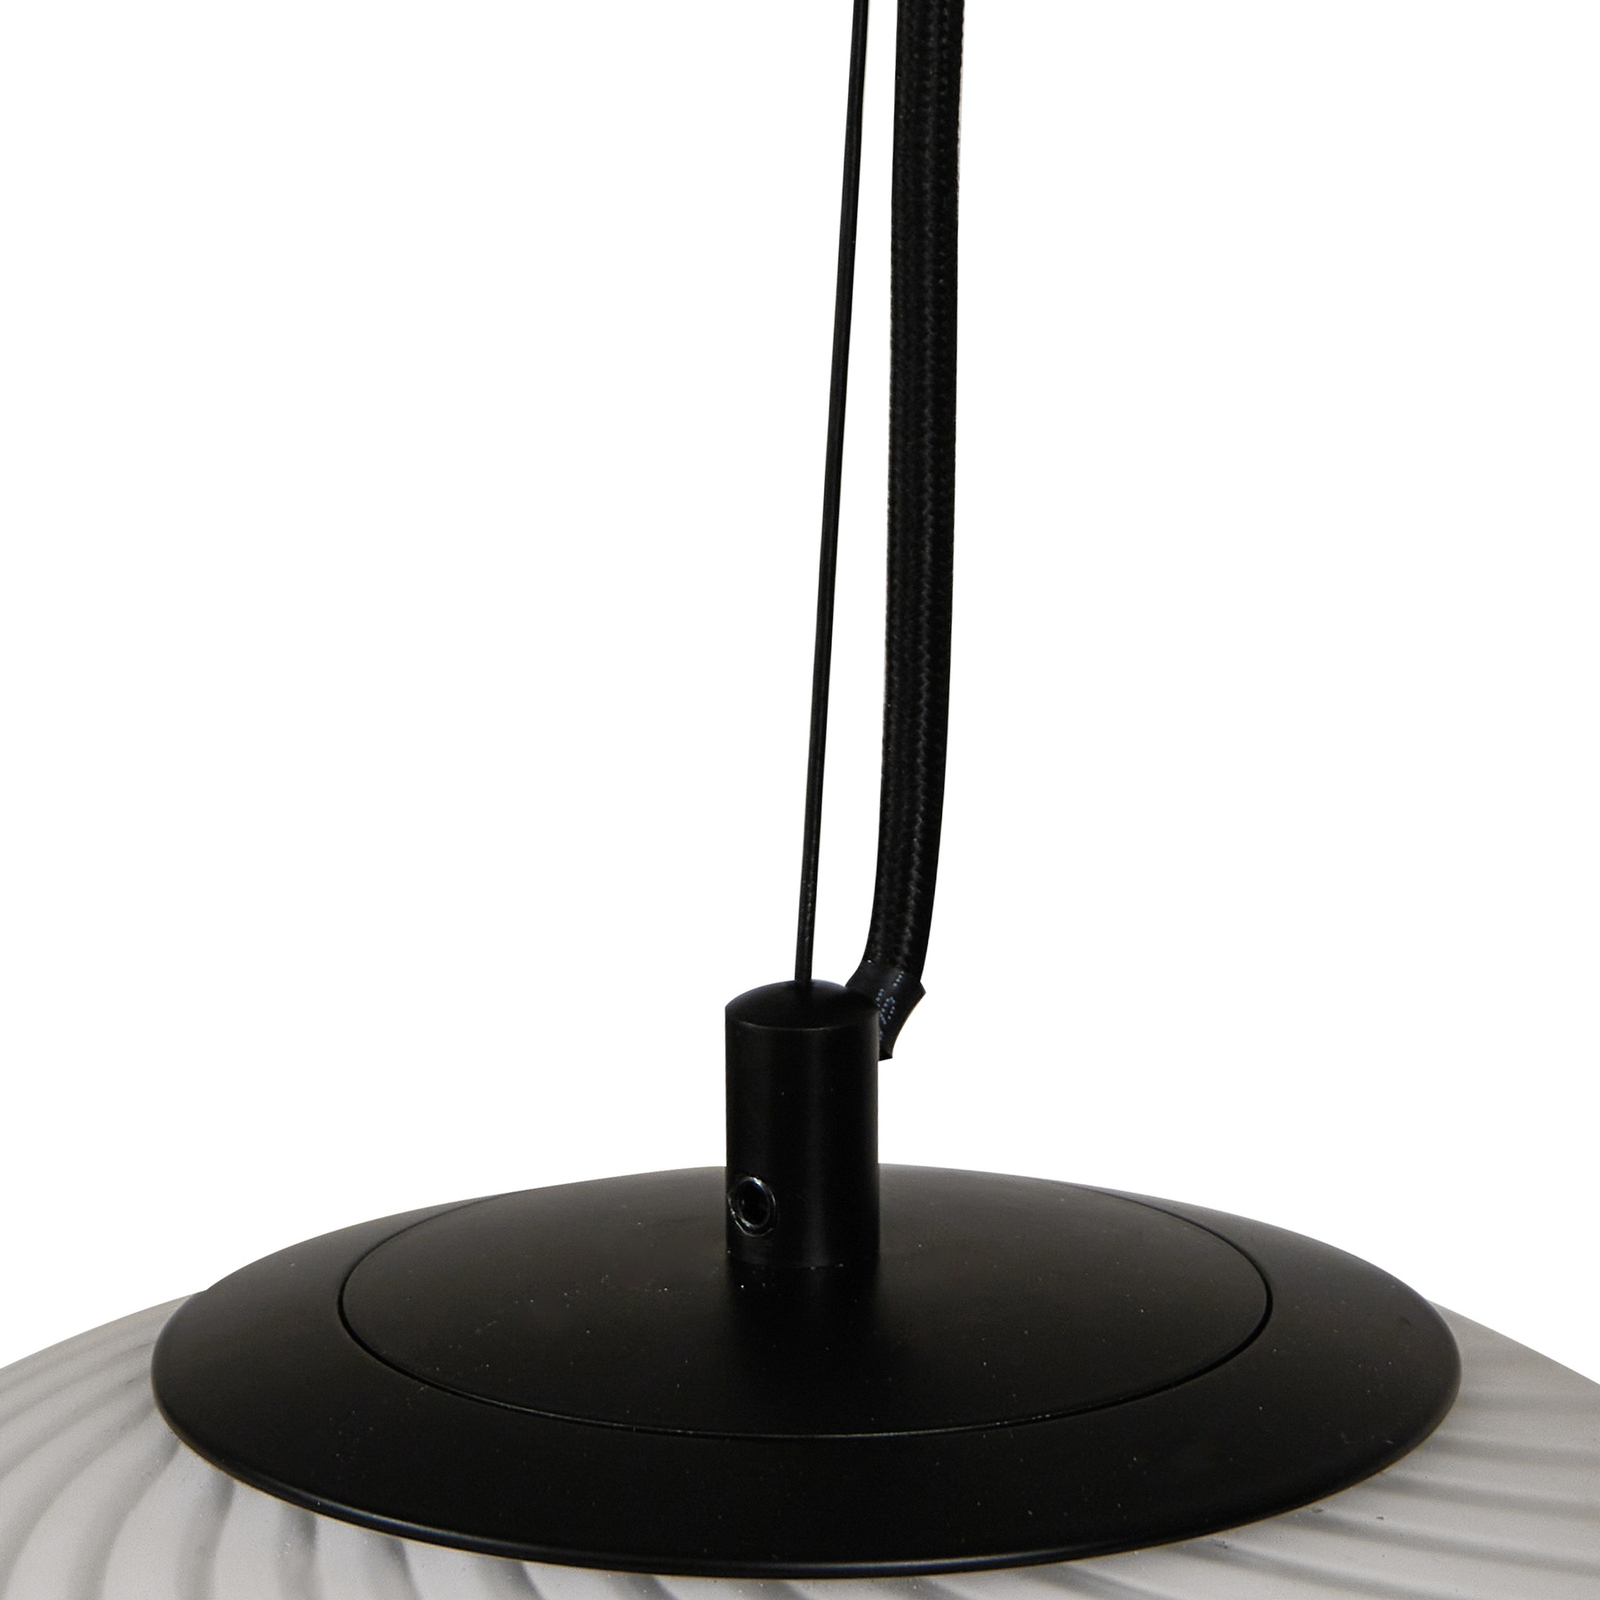 Lucande hanglamp Kestralia, wit, glas, Ø 36,8 cm, E27